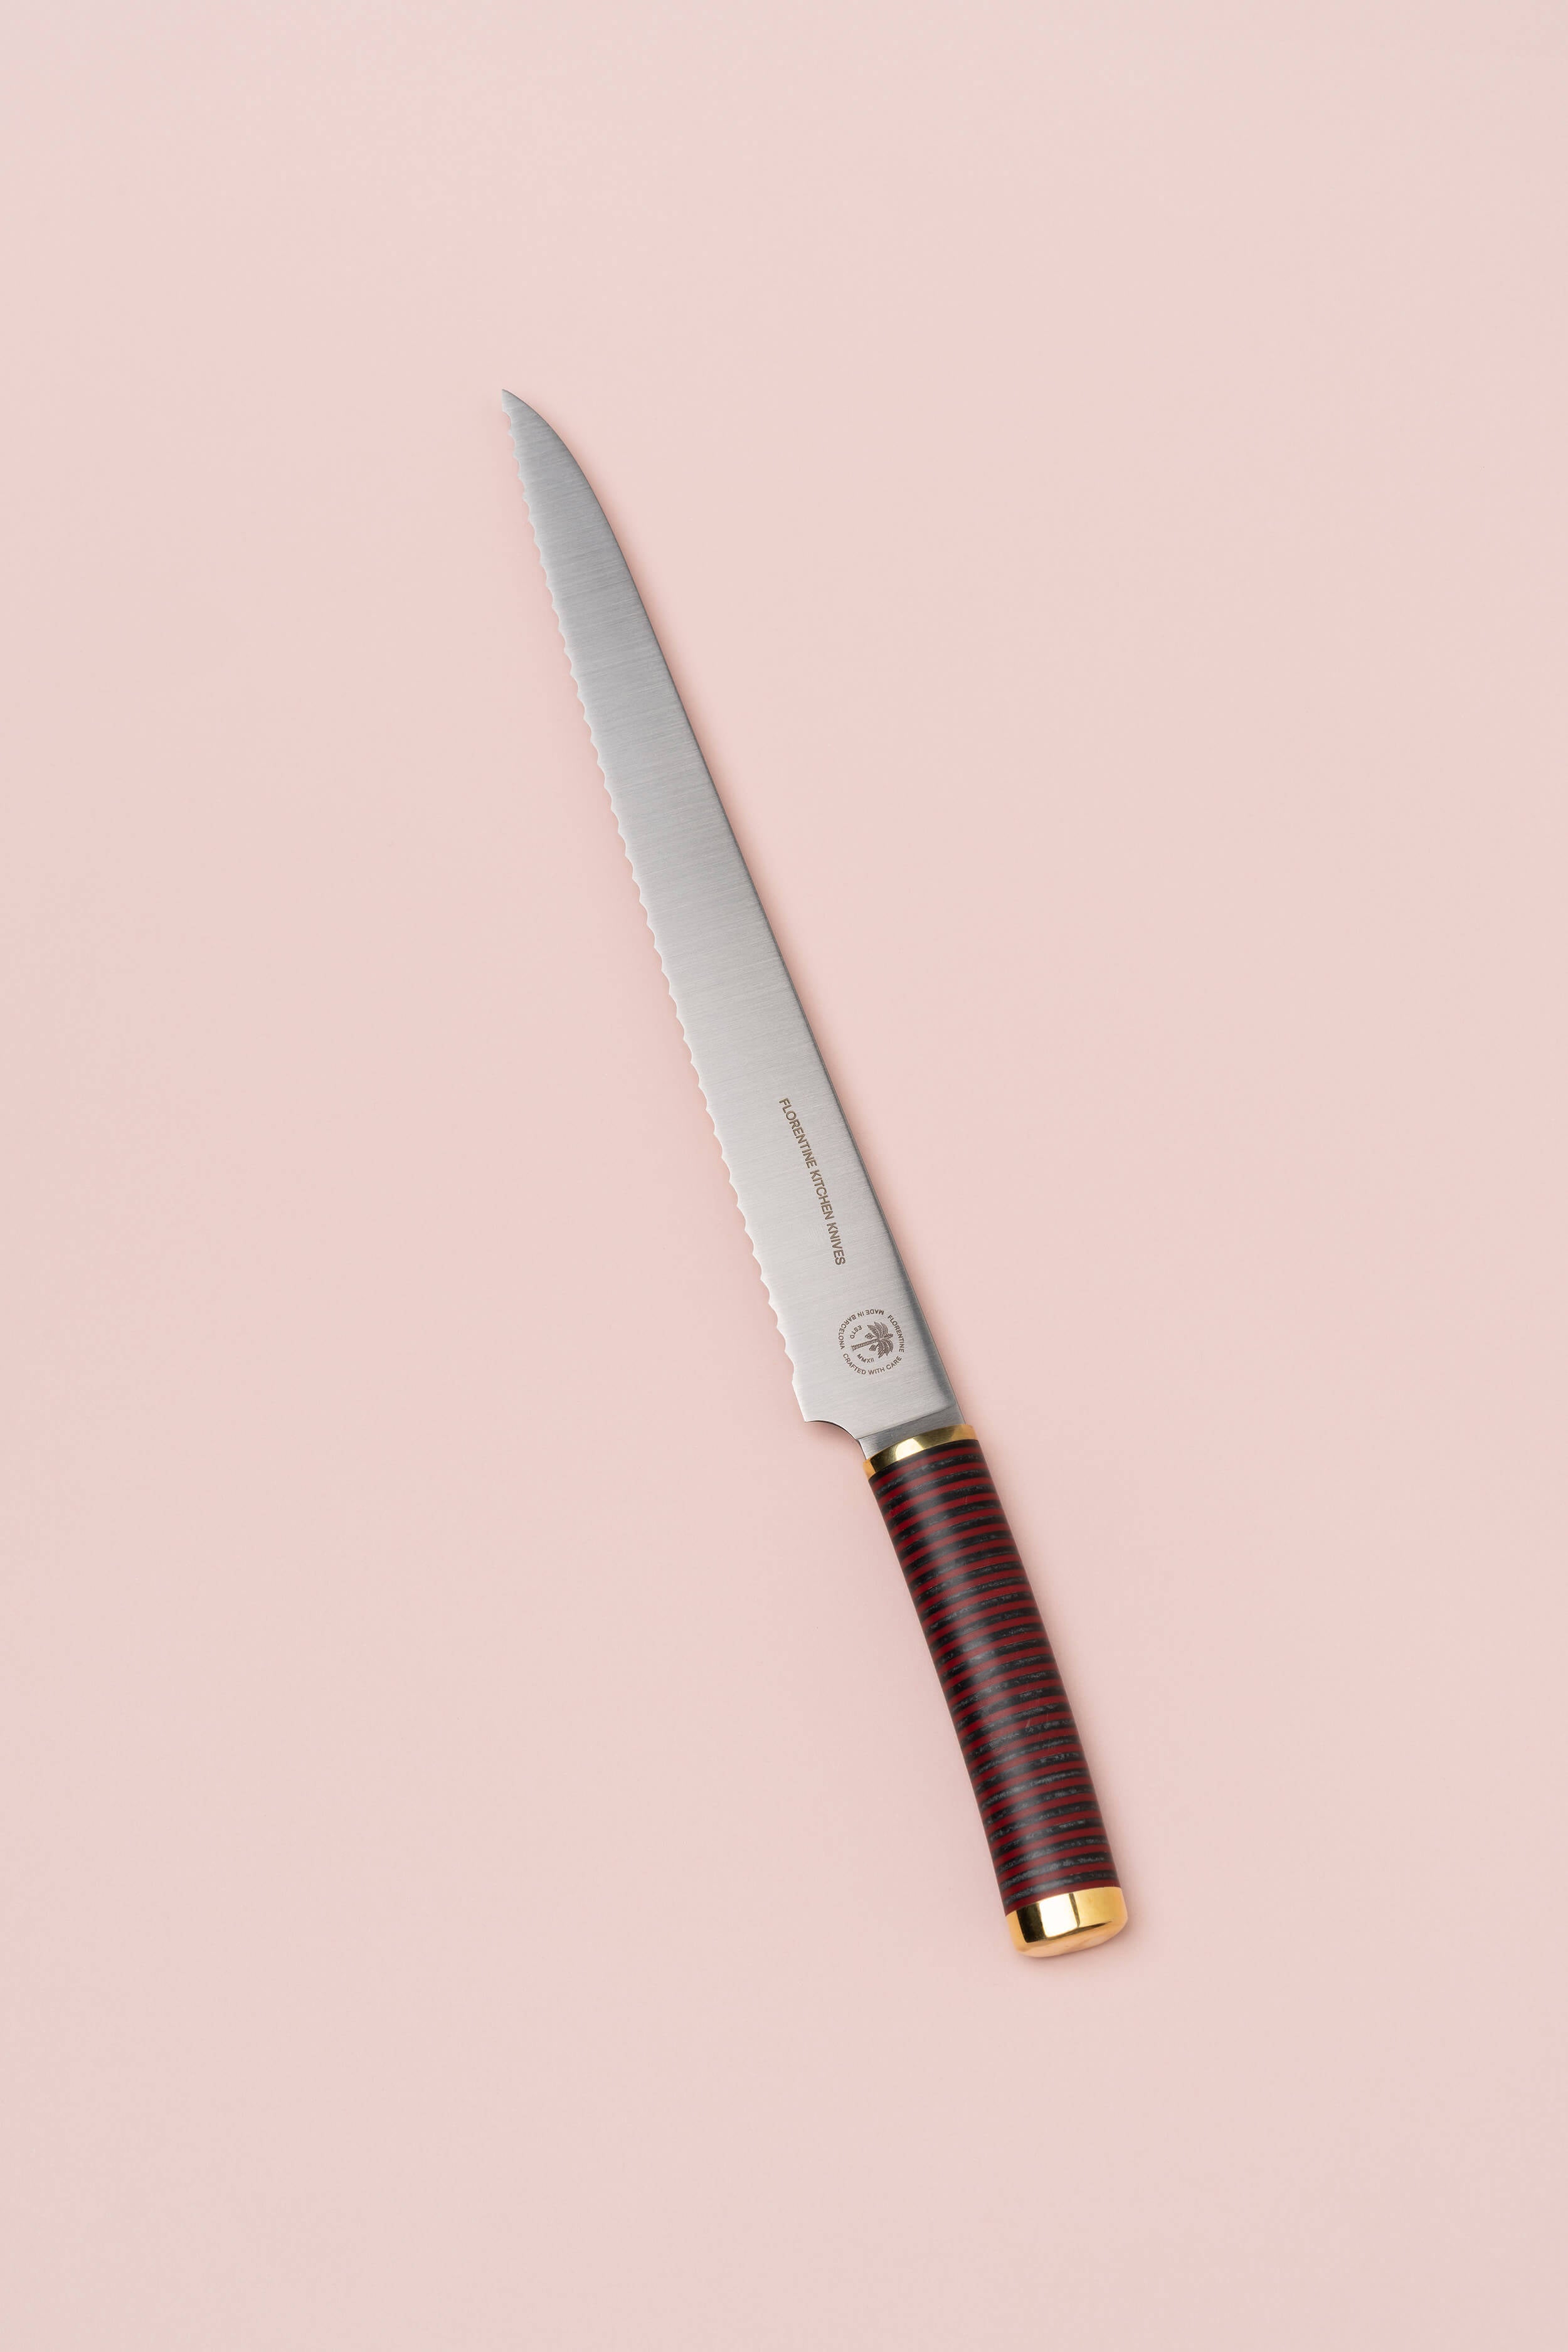 Florentine Bread knife